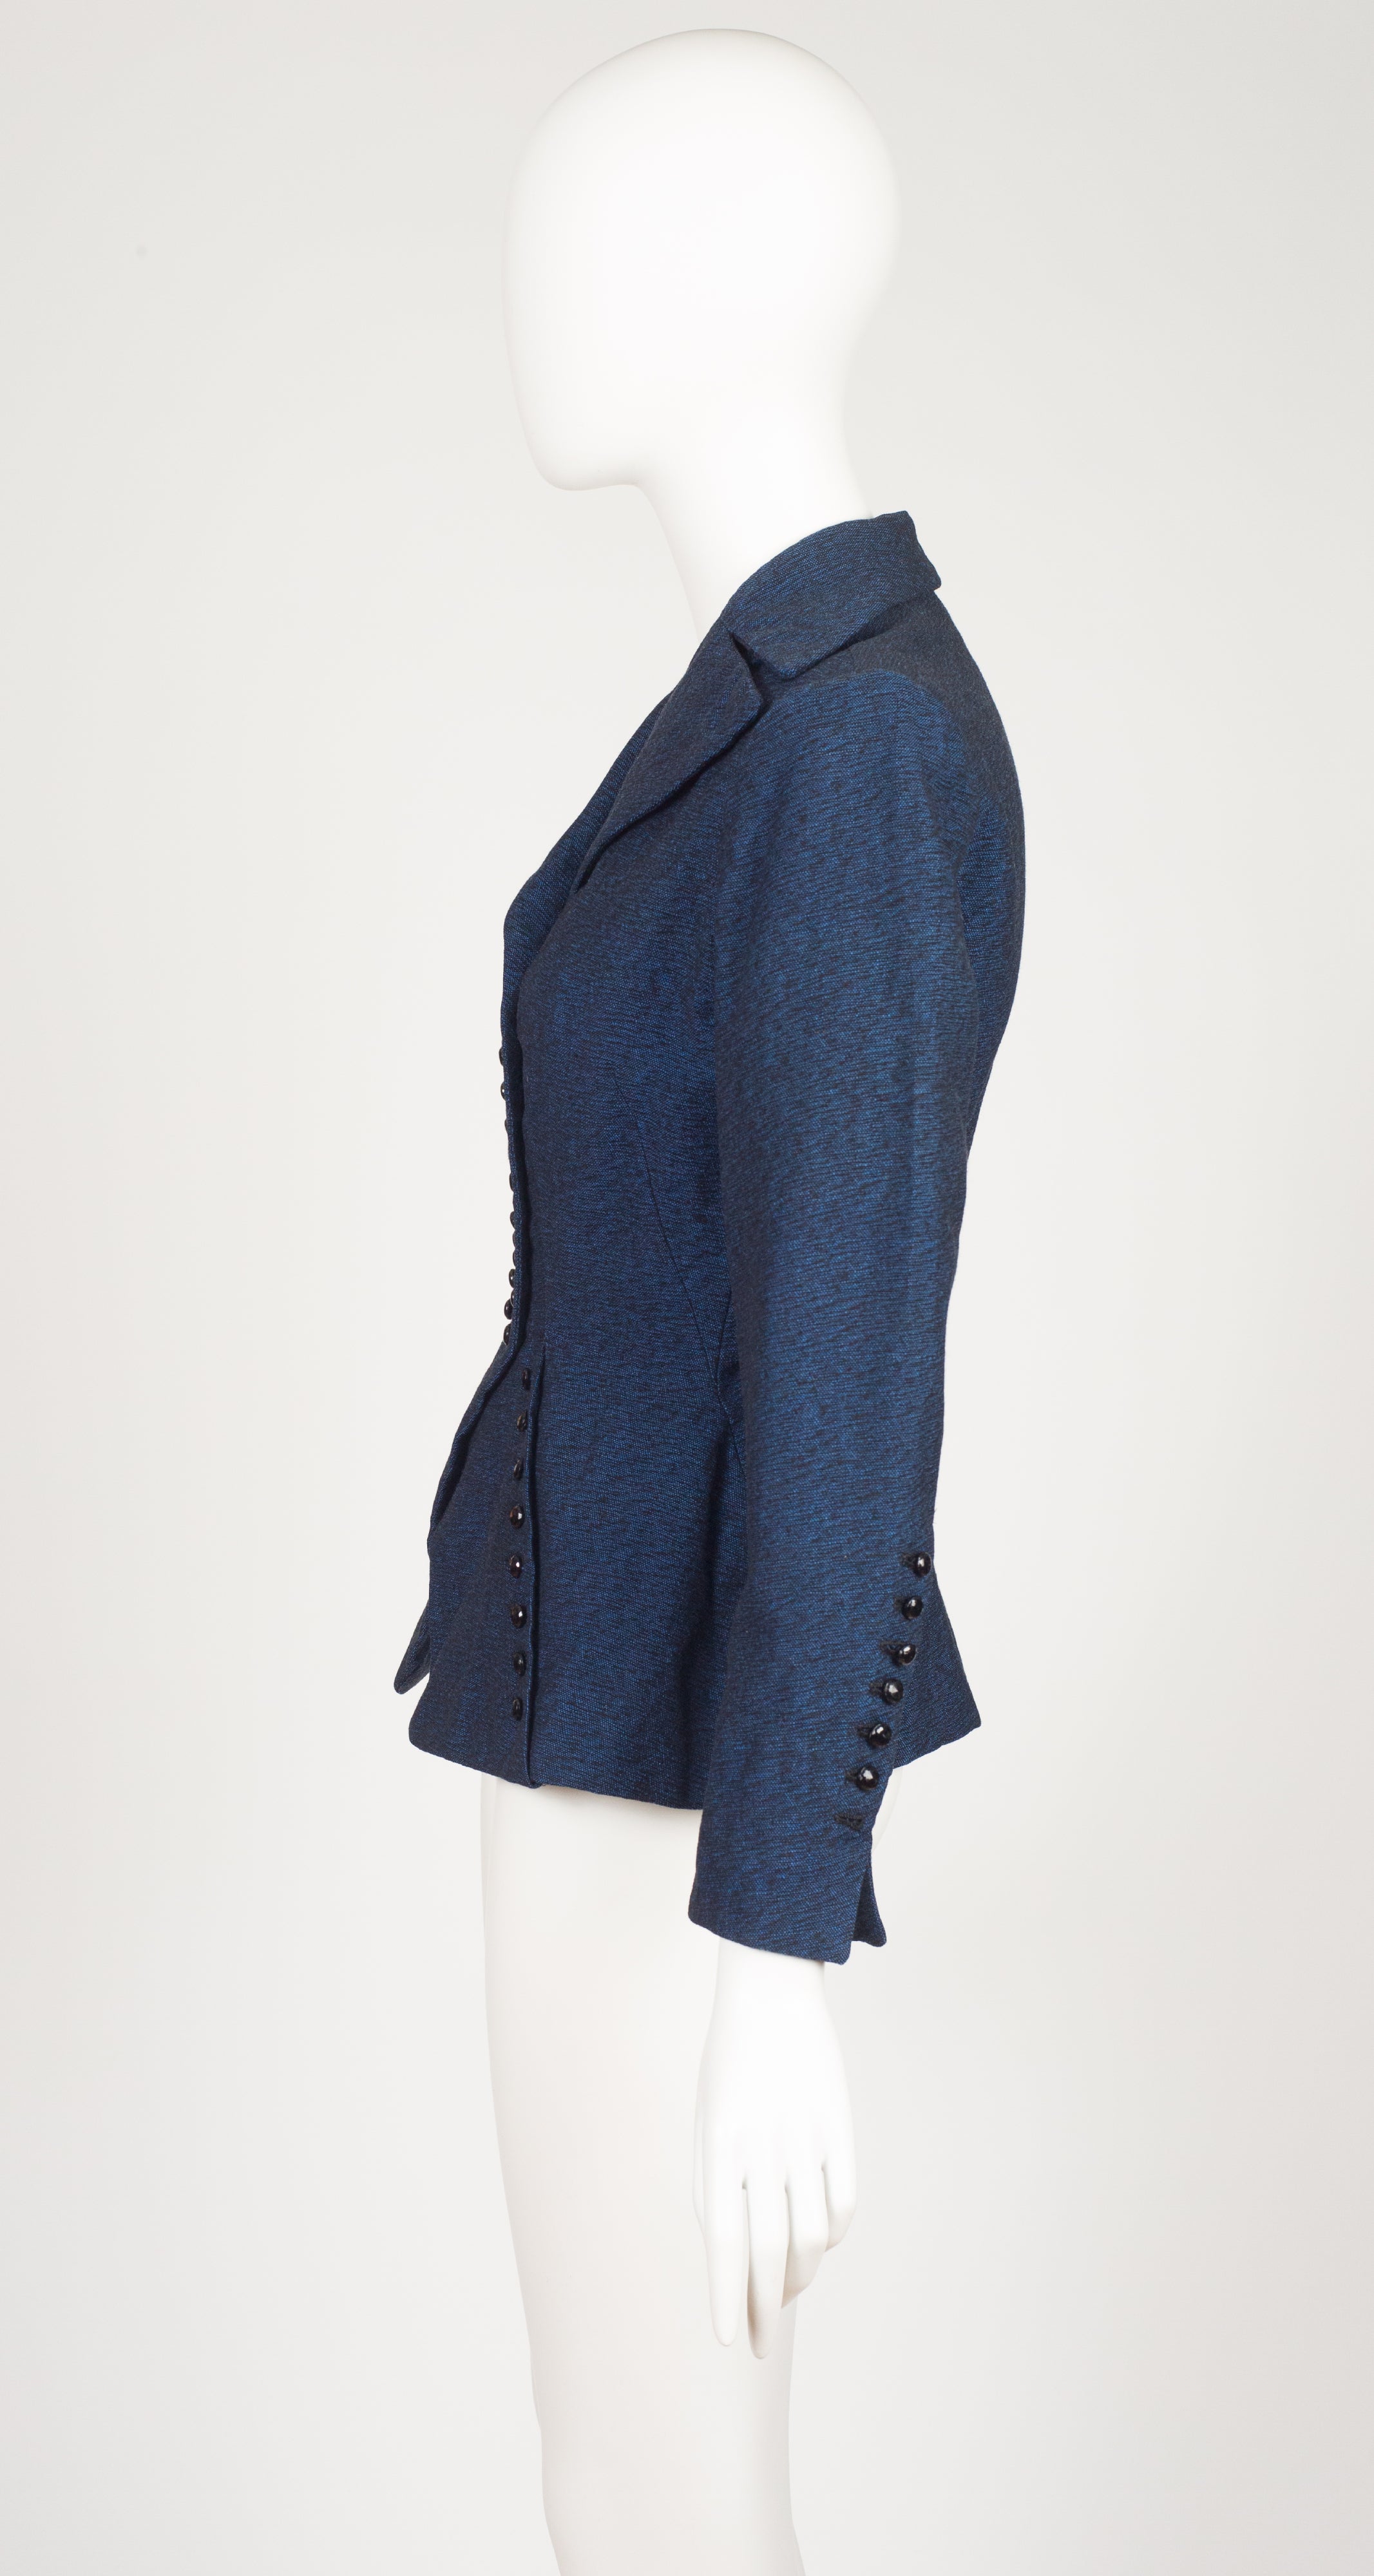 1940s "New Look" Navy Wool Tweed Double-Breasted Jacket